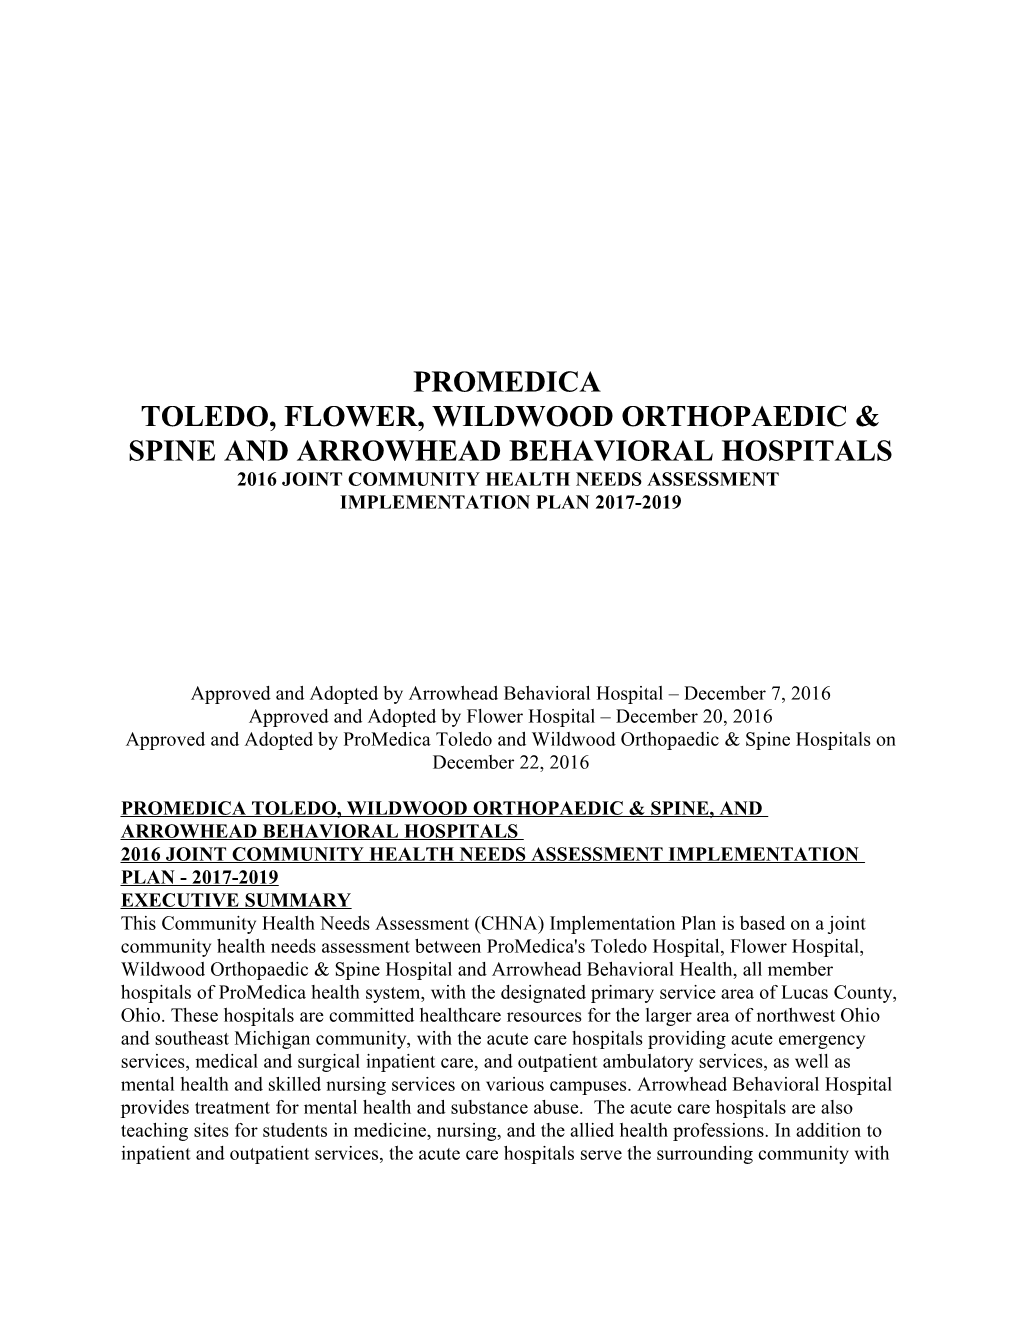 Toledo, Flower, Wildwood Orthopaedic & Spine and Arrowhead Behavioral Hospitals